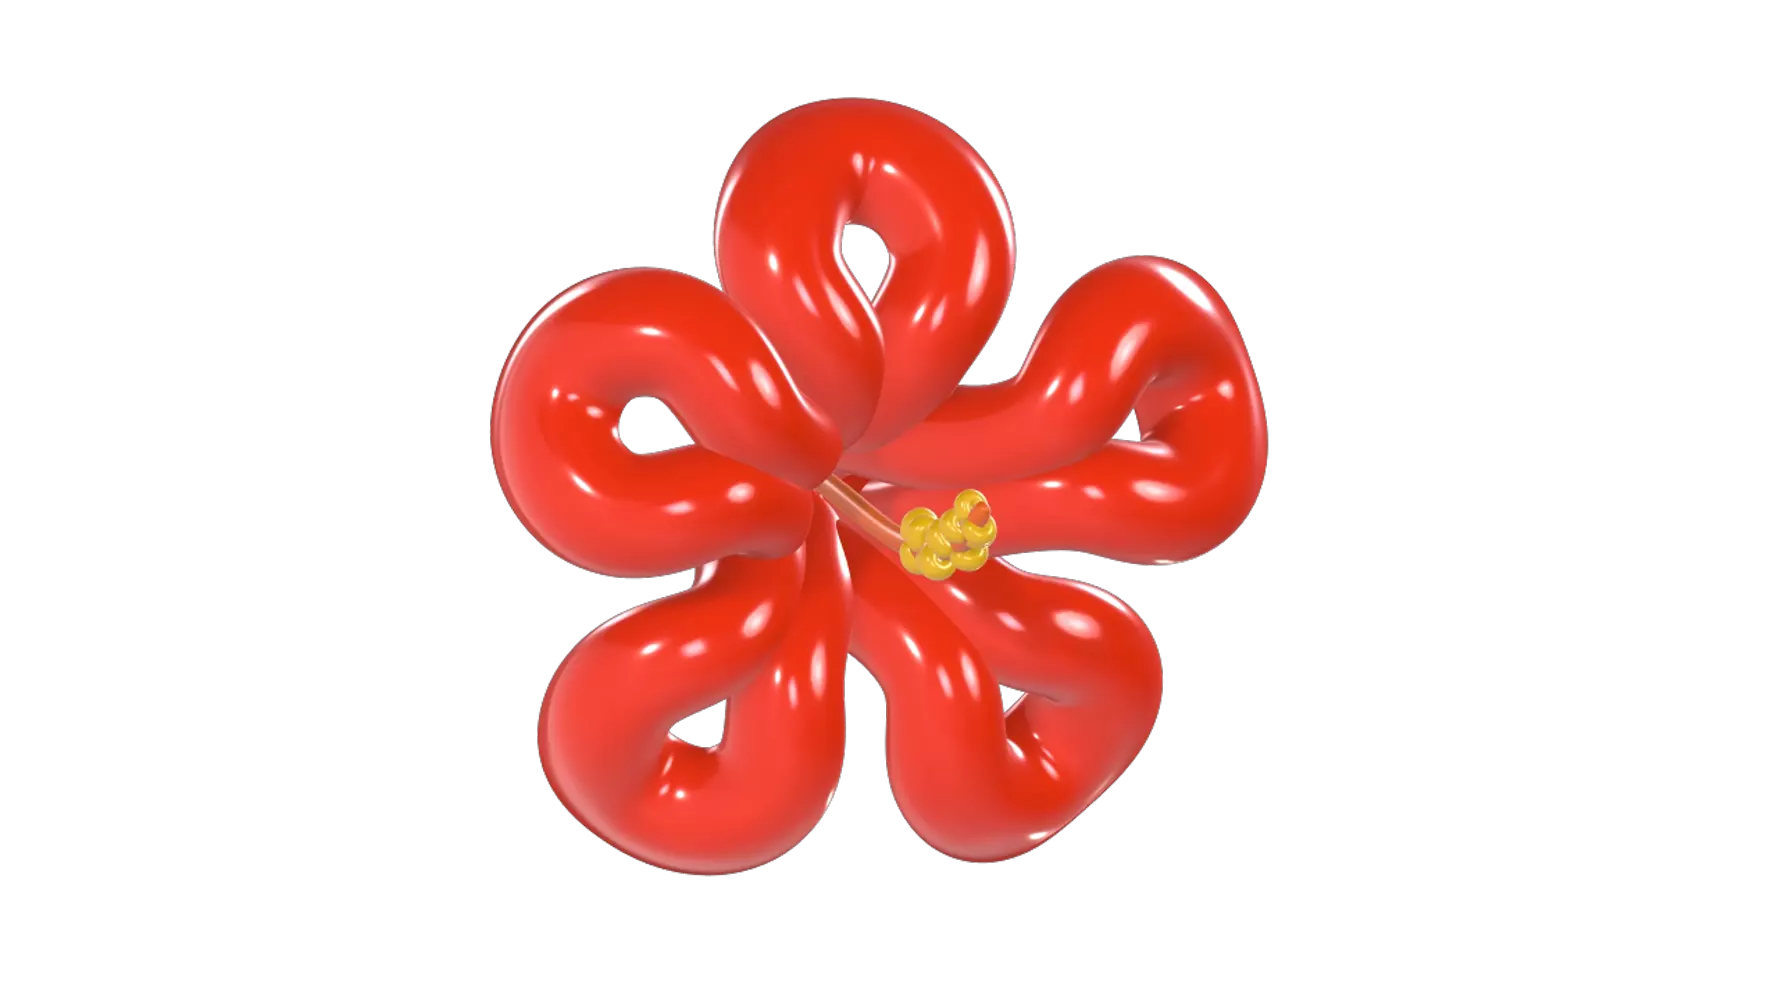 Hibiscus Flower Balloon 3D Graphic